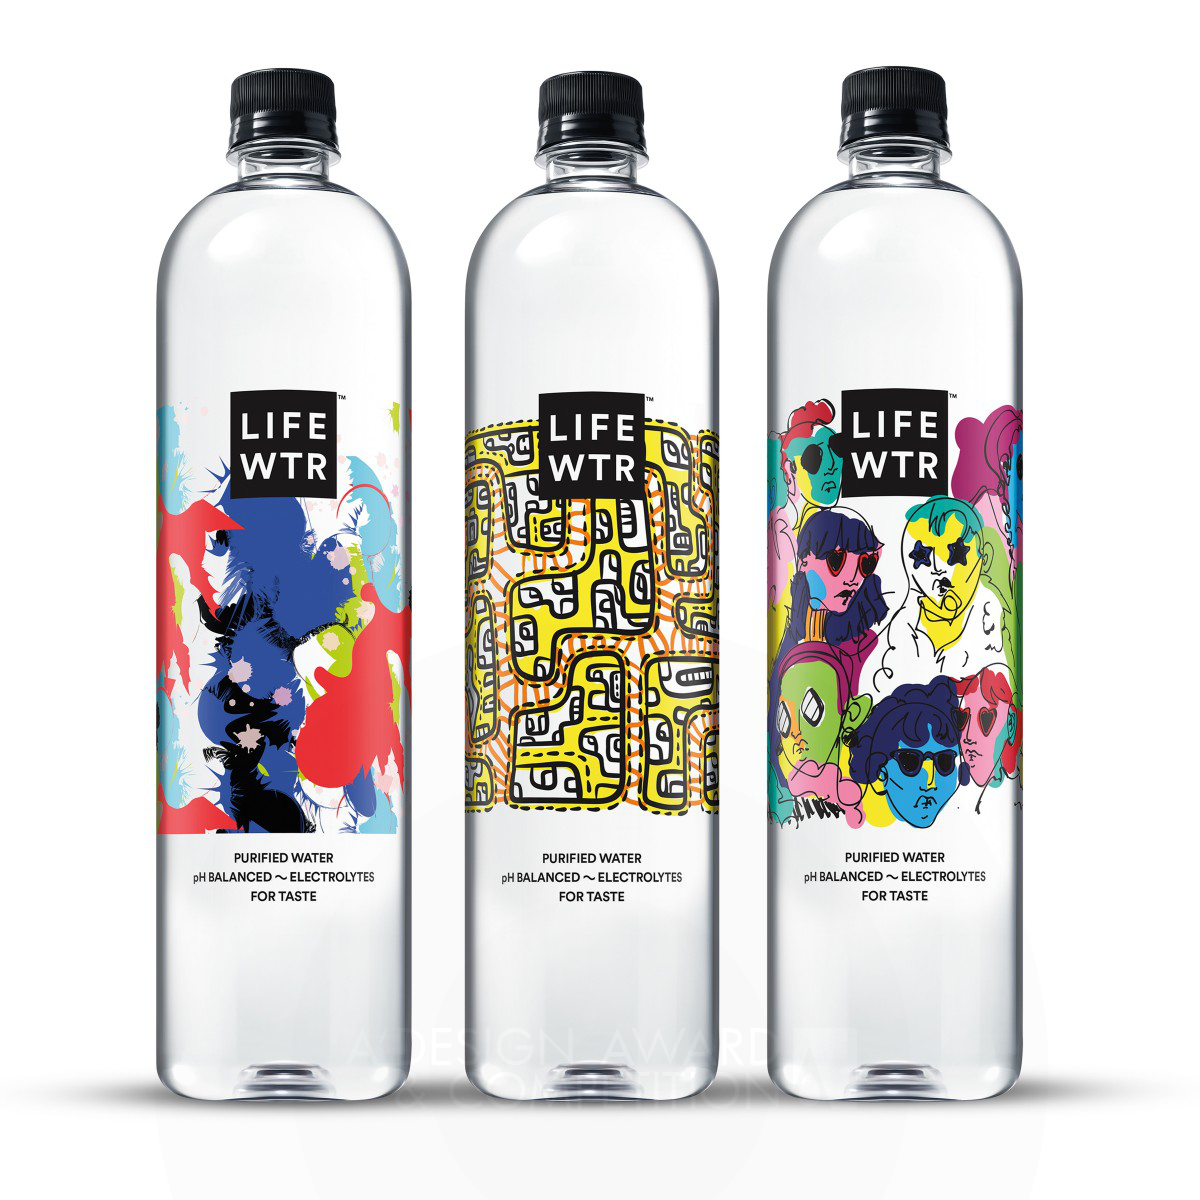 LIFEWTR Series 3:Emerging Fashion Design Brand Packaging by PepsiCo Design & Innovation